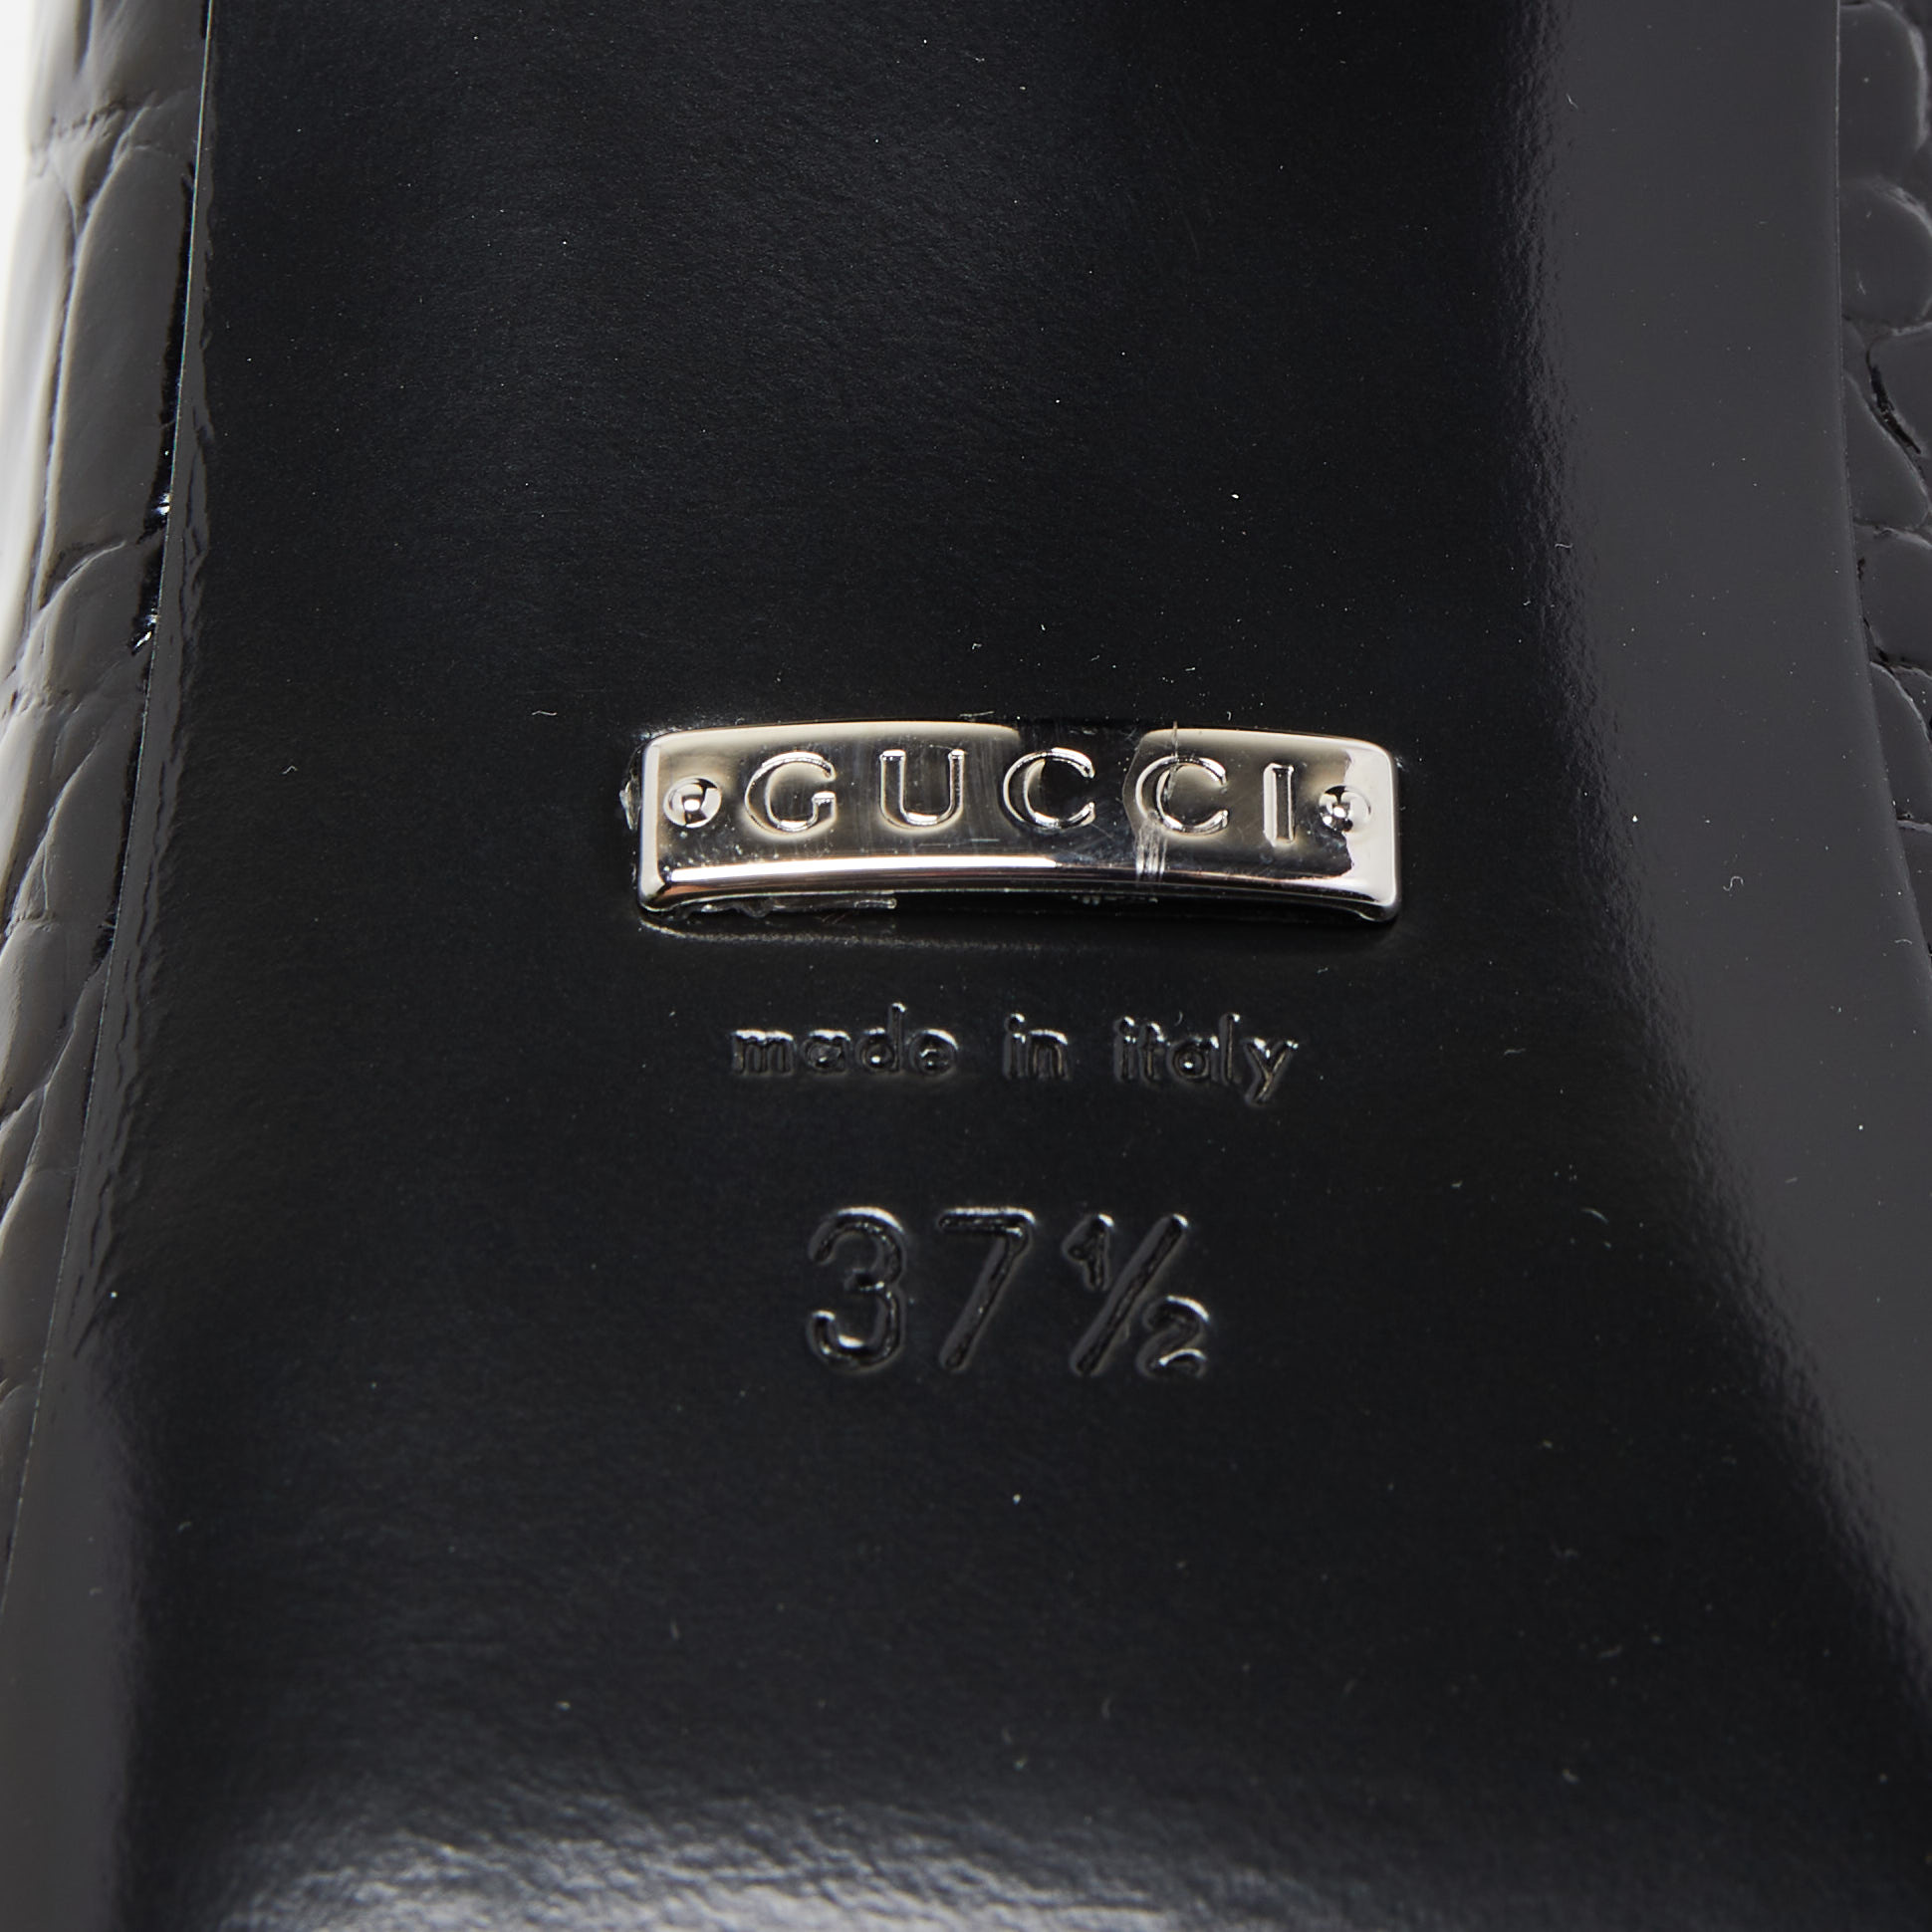 Gucci Black Croc Leather Open Toe Slide Mules Size 37.5